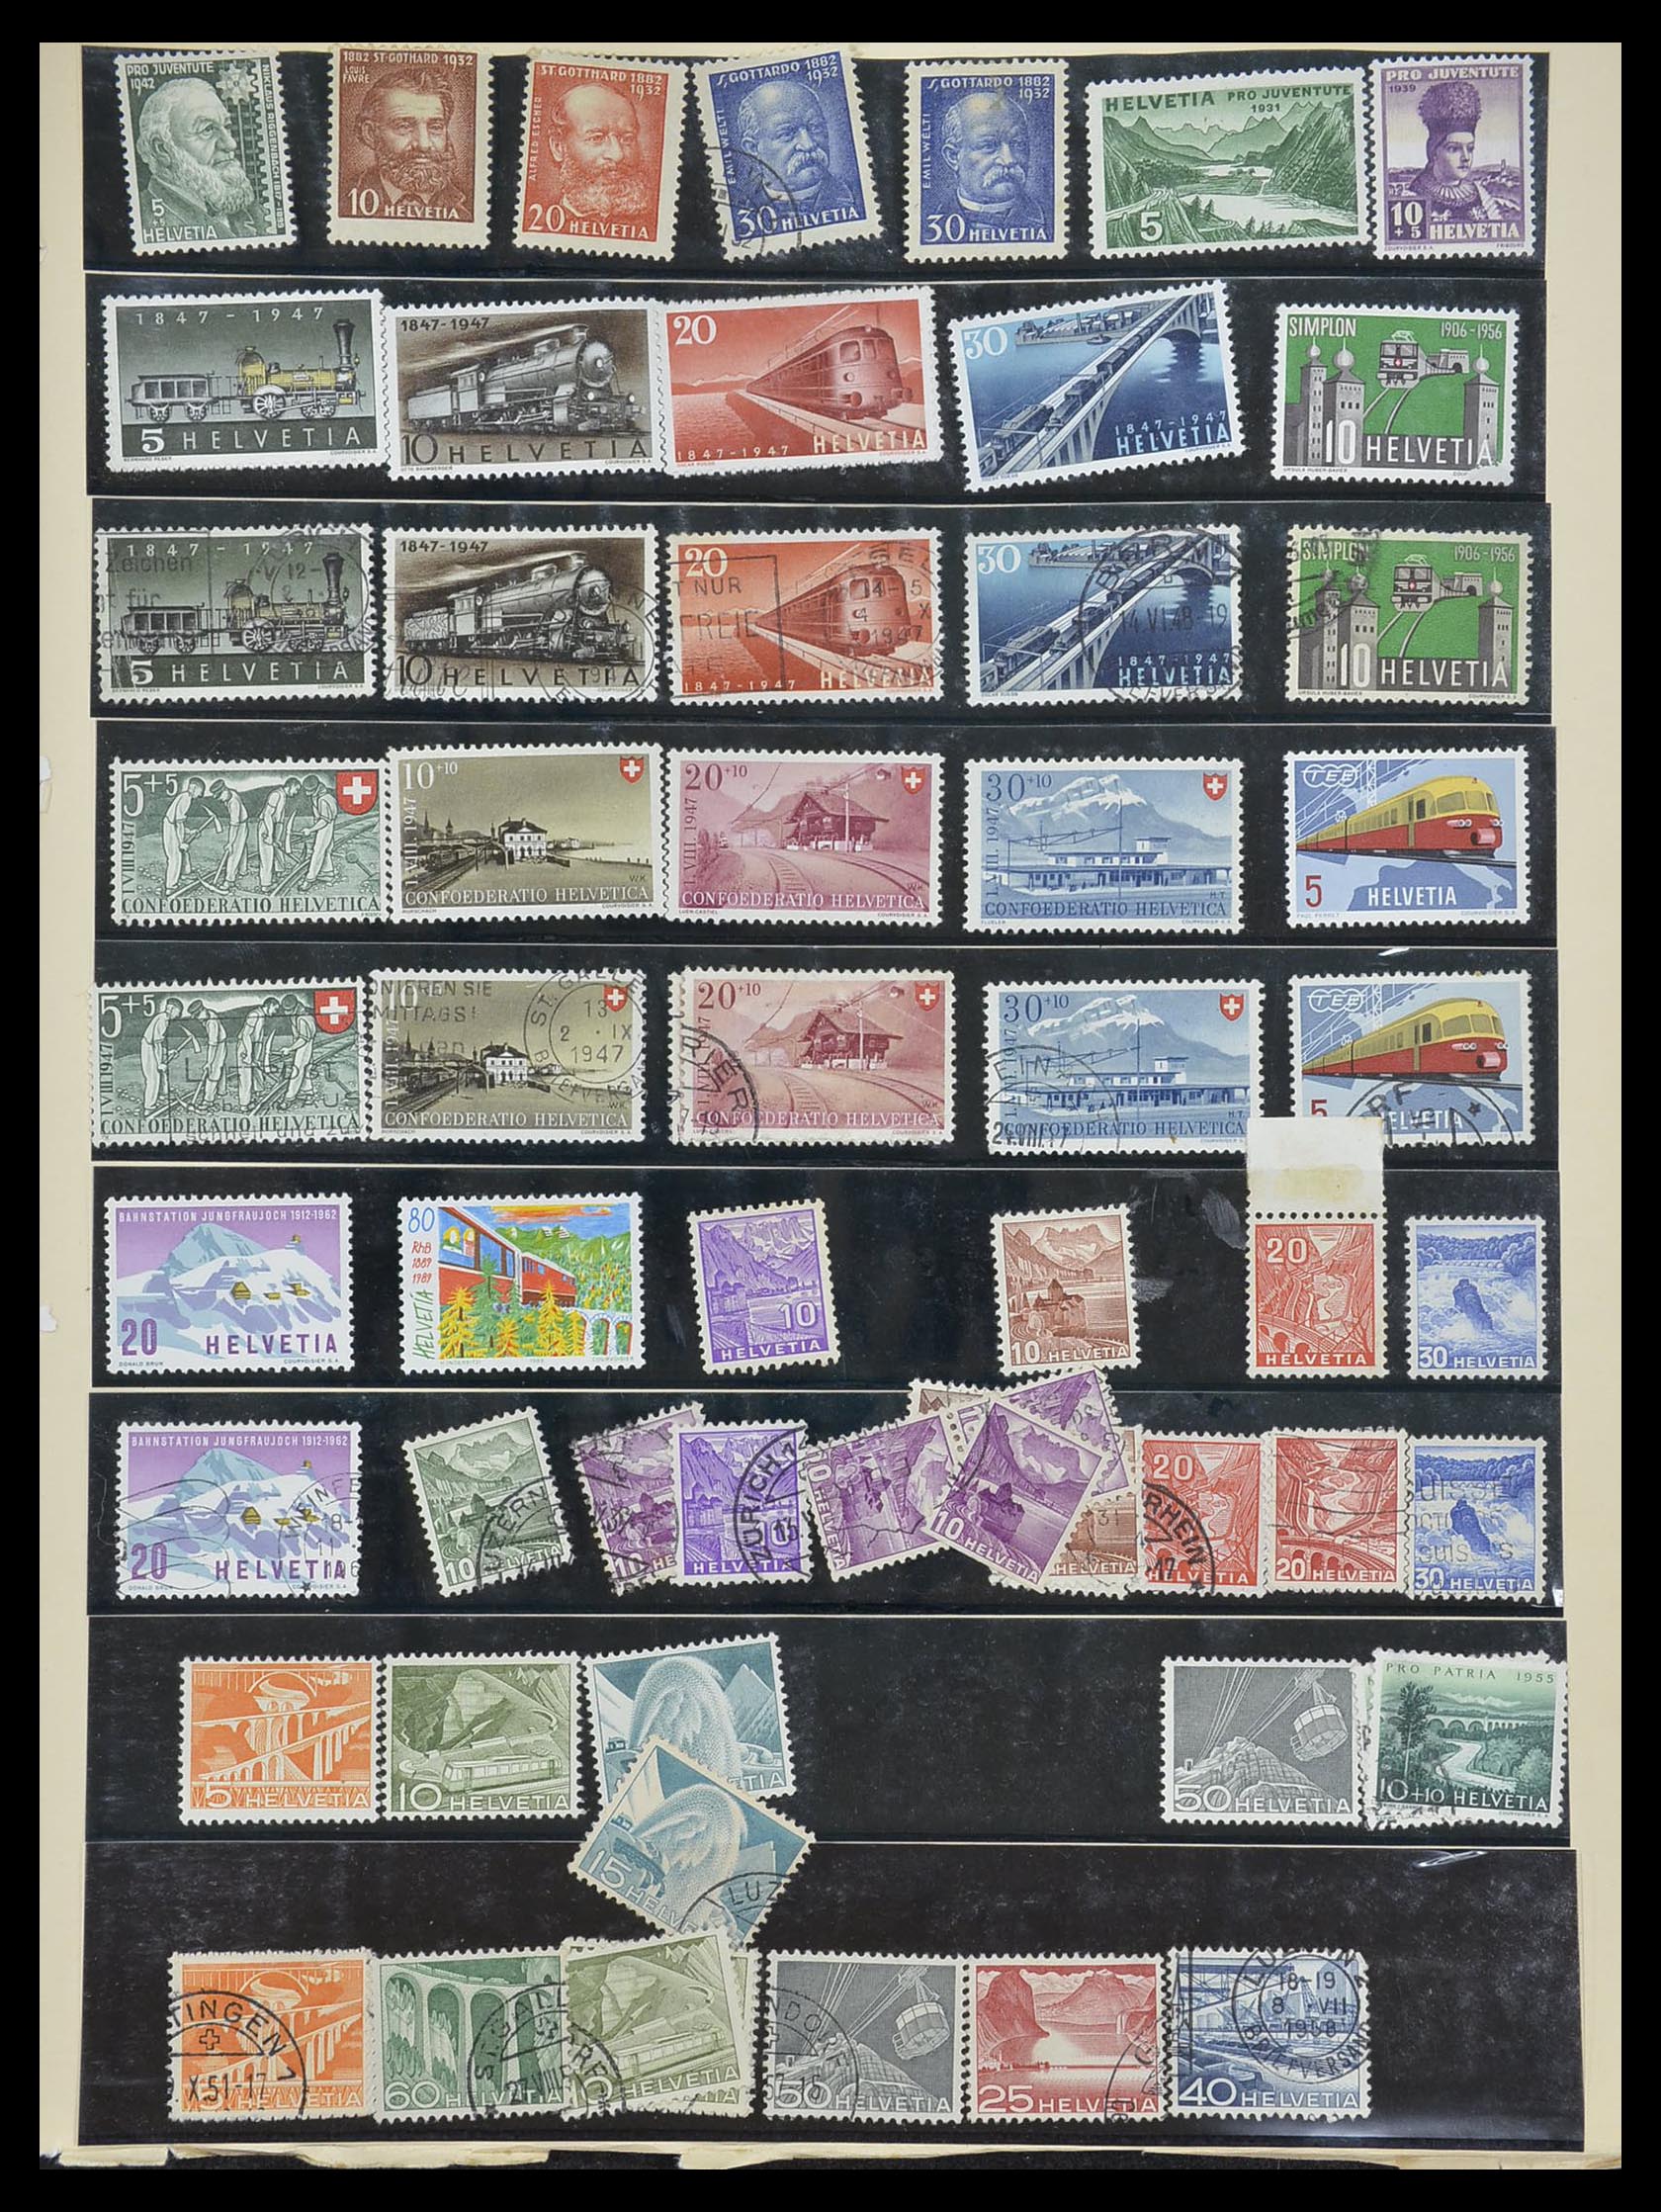 33755 2053 - Postzegelverzameling 33755 Motief treinen 1900-2010.